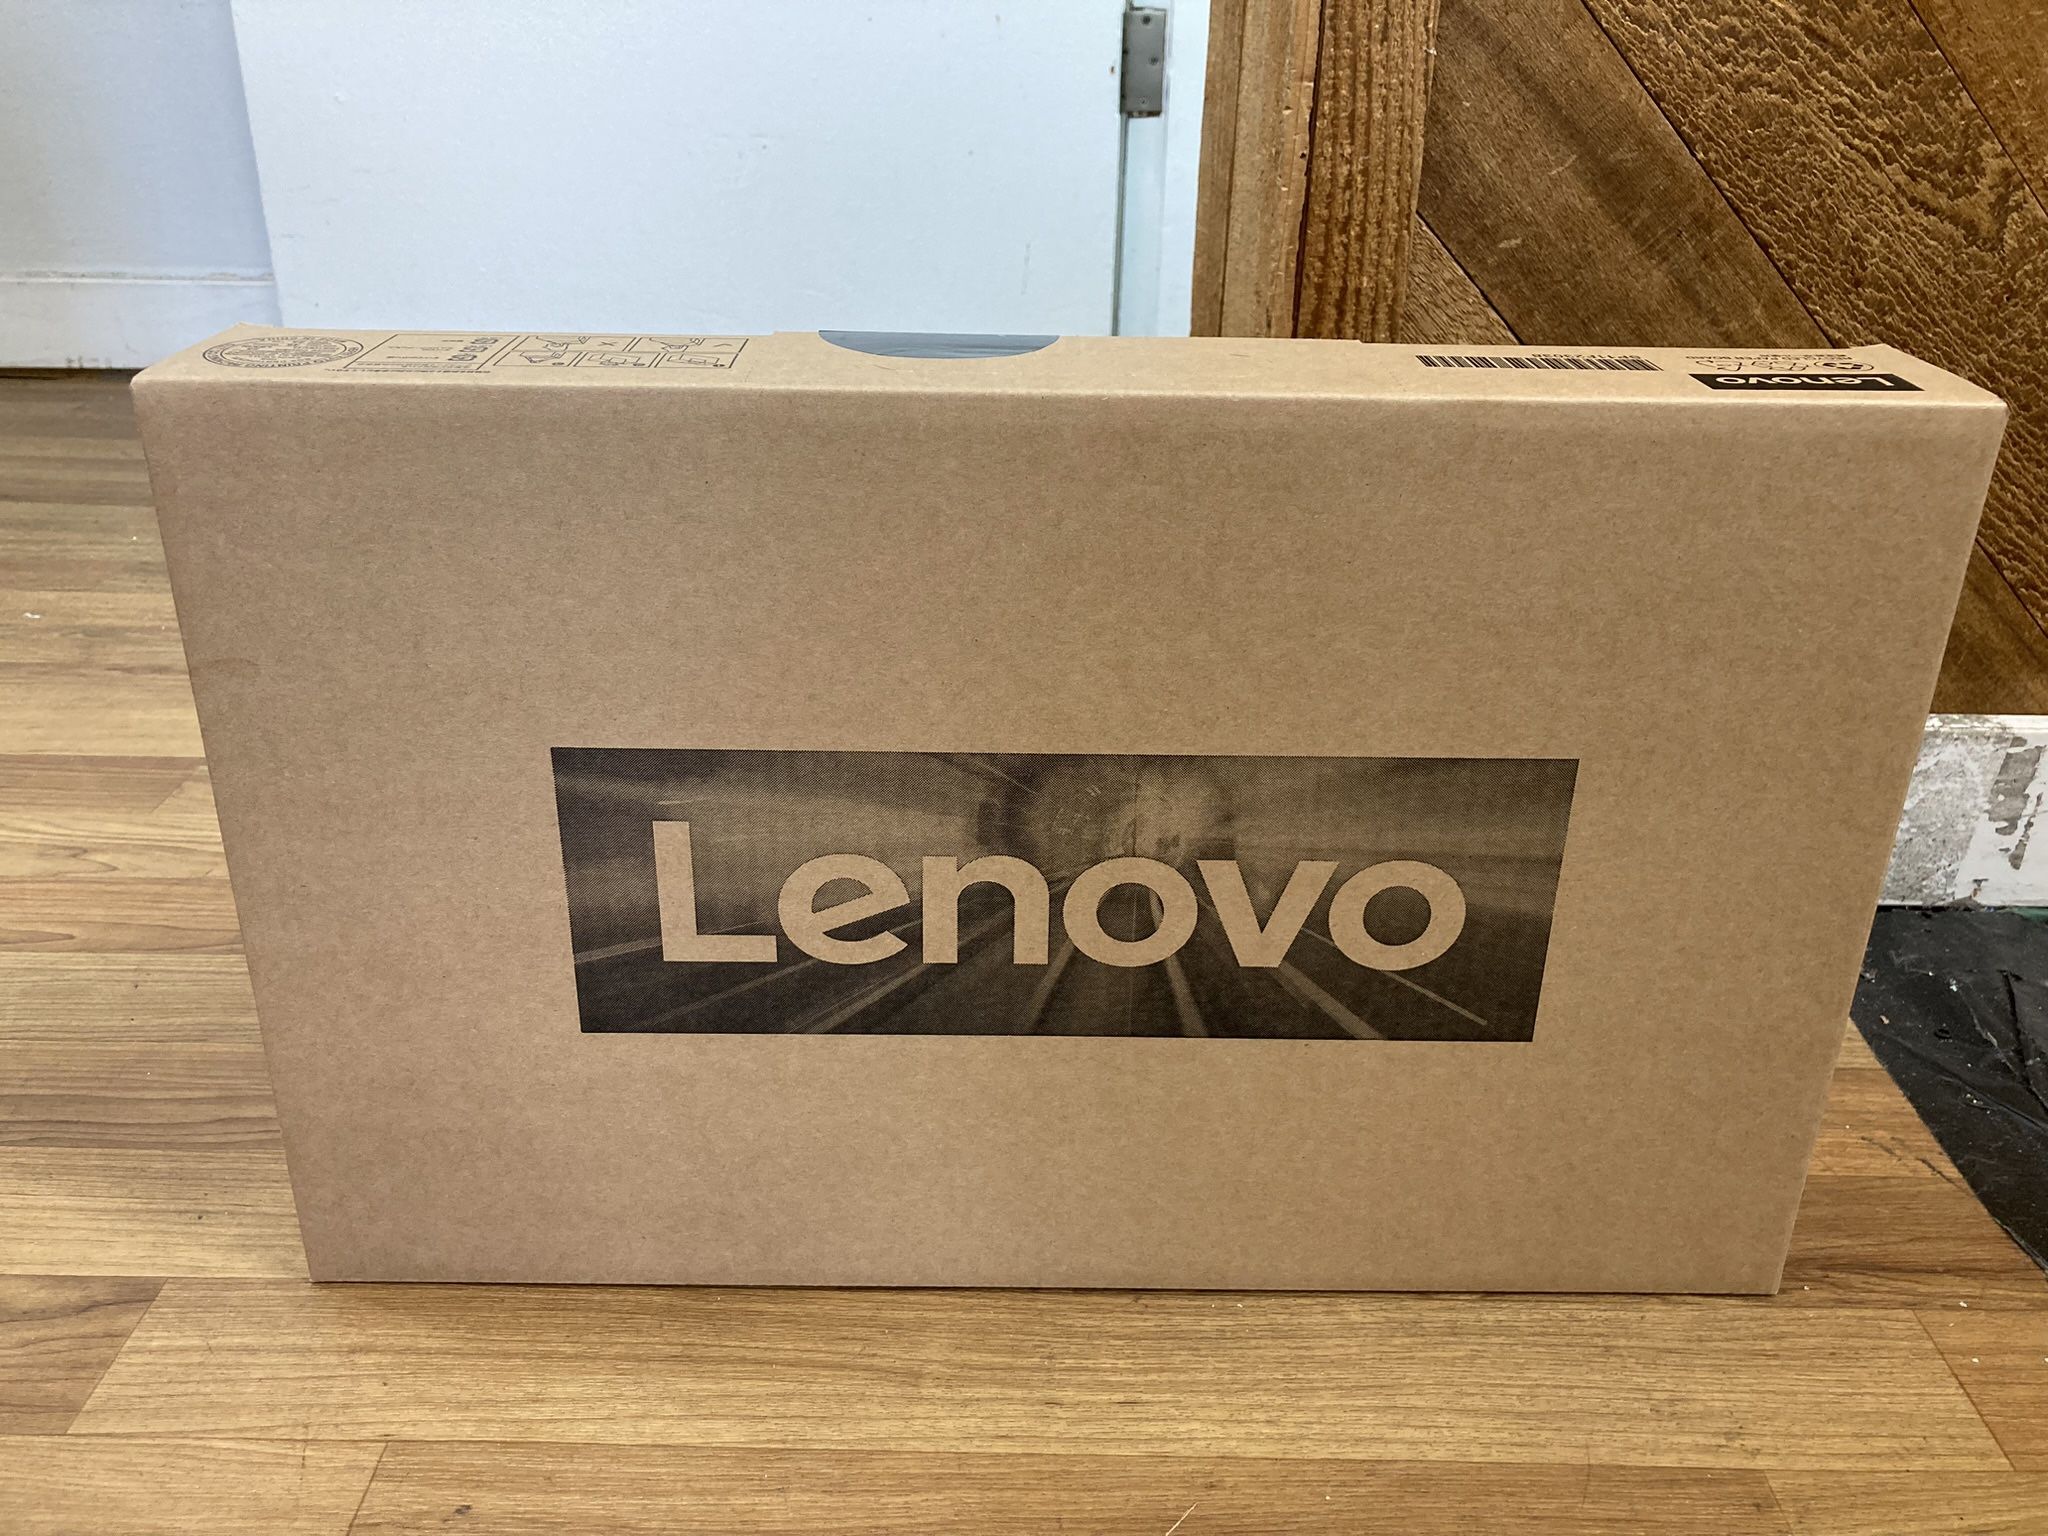 BRAND NEW IN BOX Lenovo IdeaPad 14IGL7 14 inch laptop